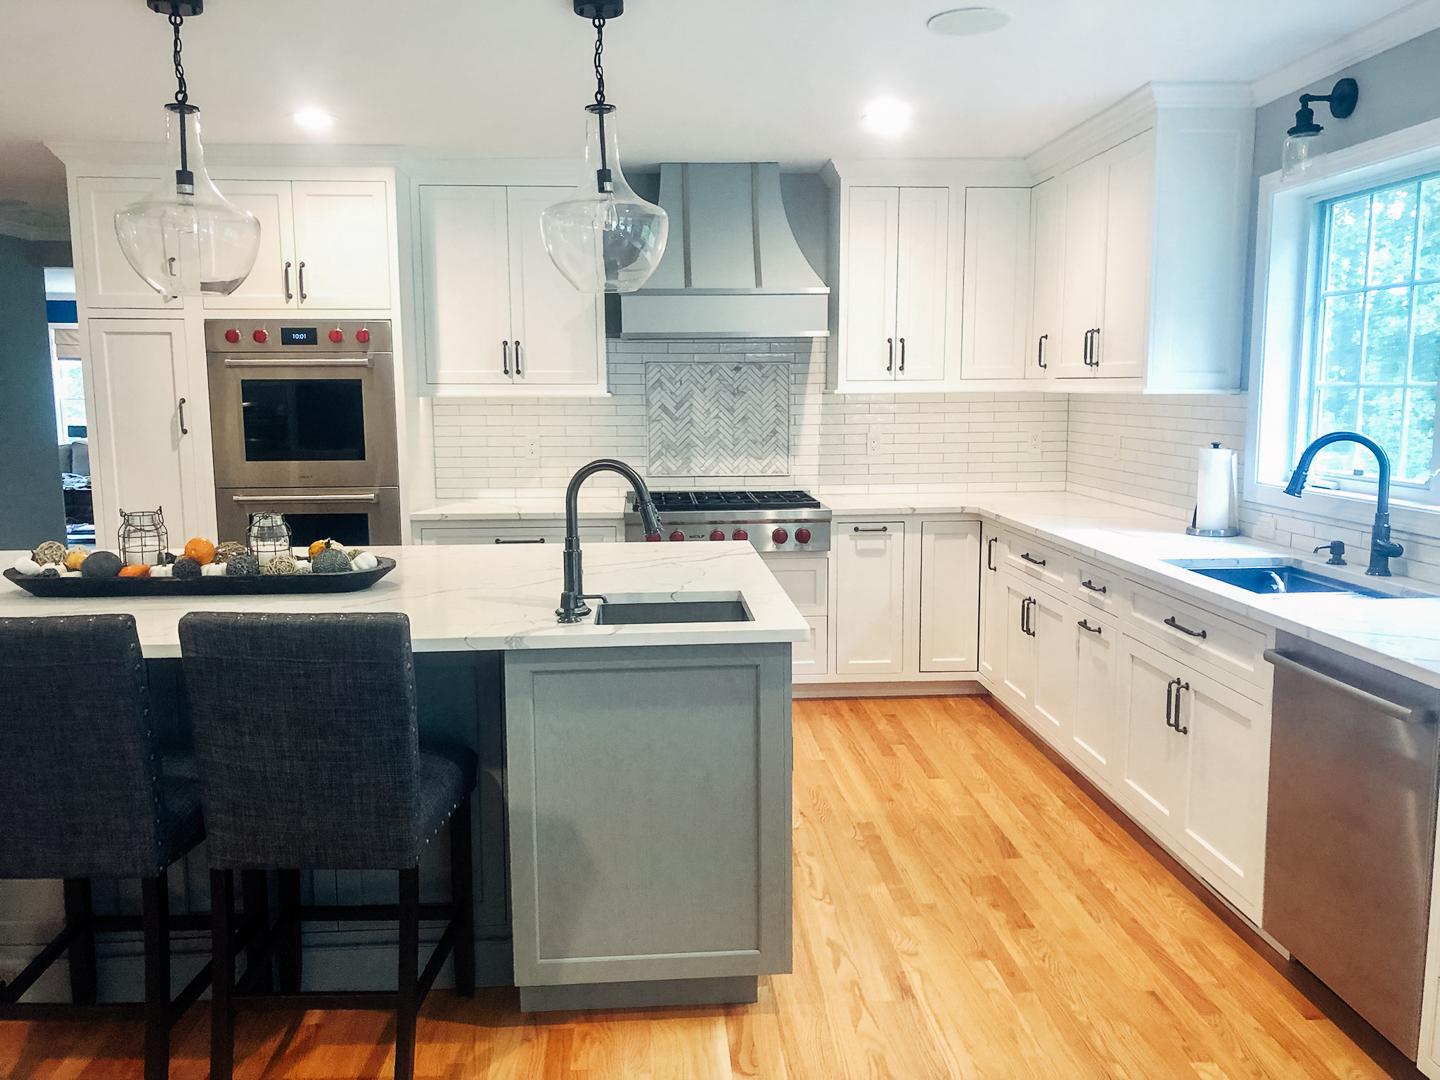 hardwood floors in bright airy kitchen